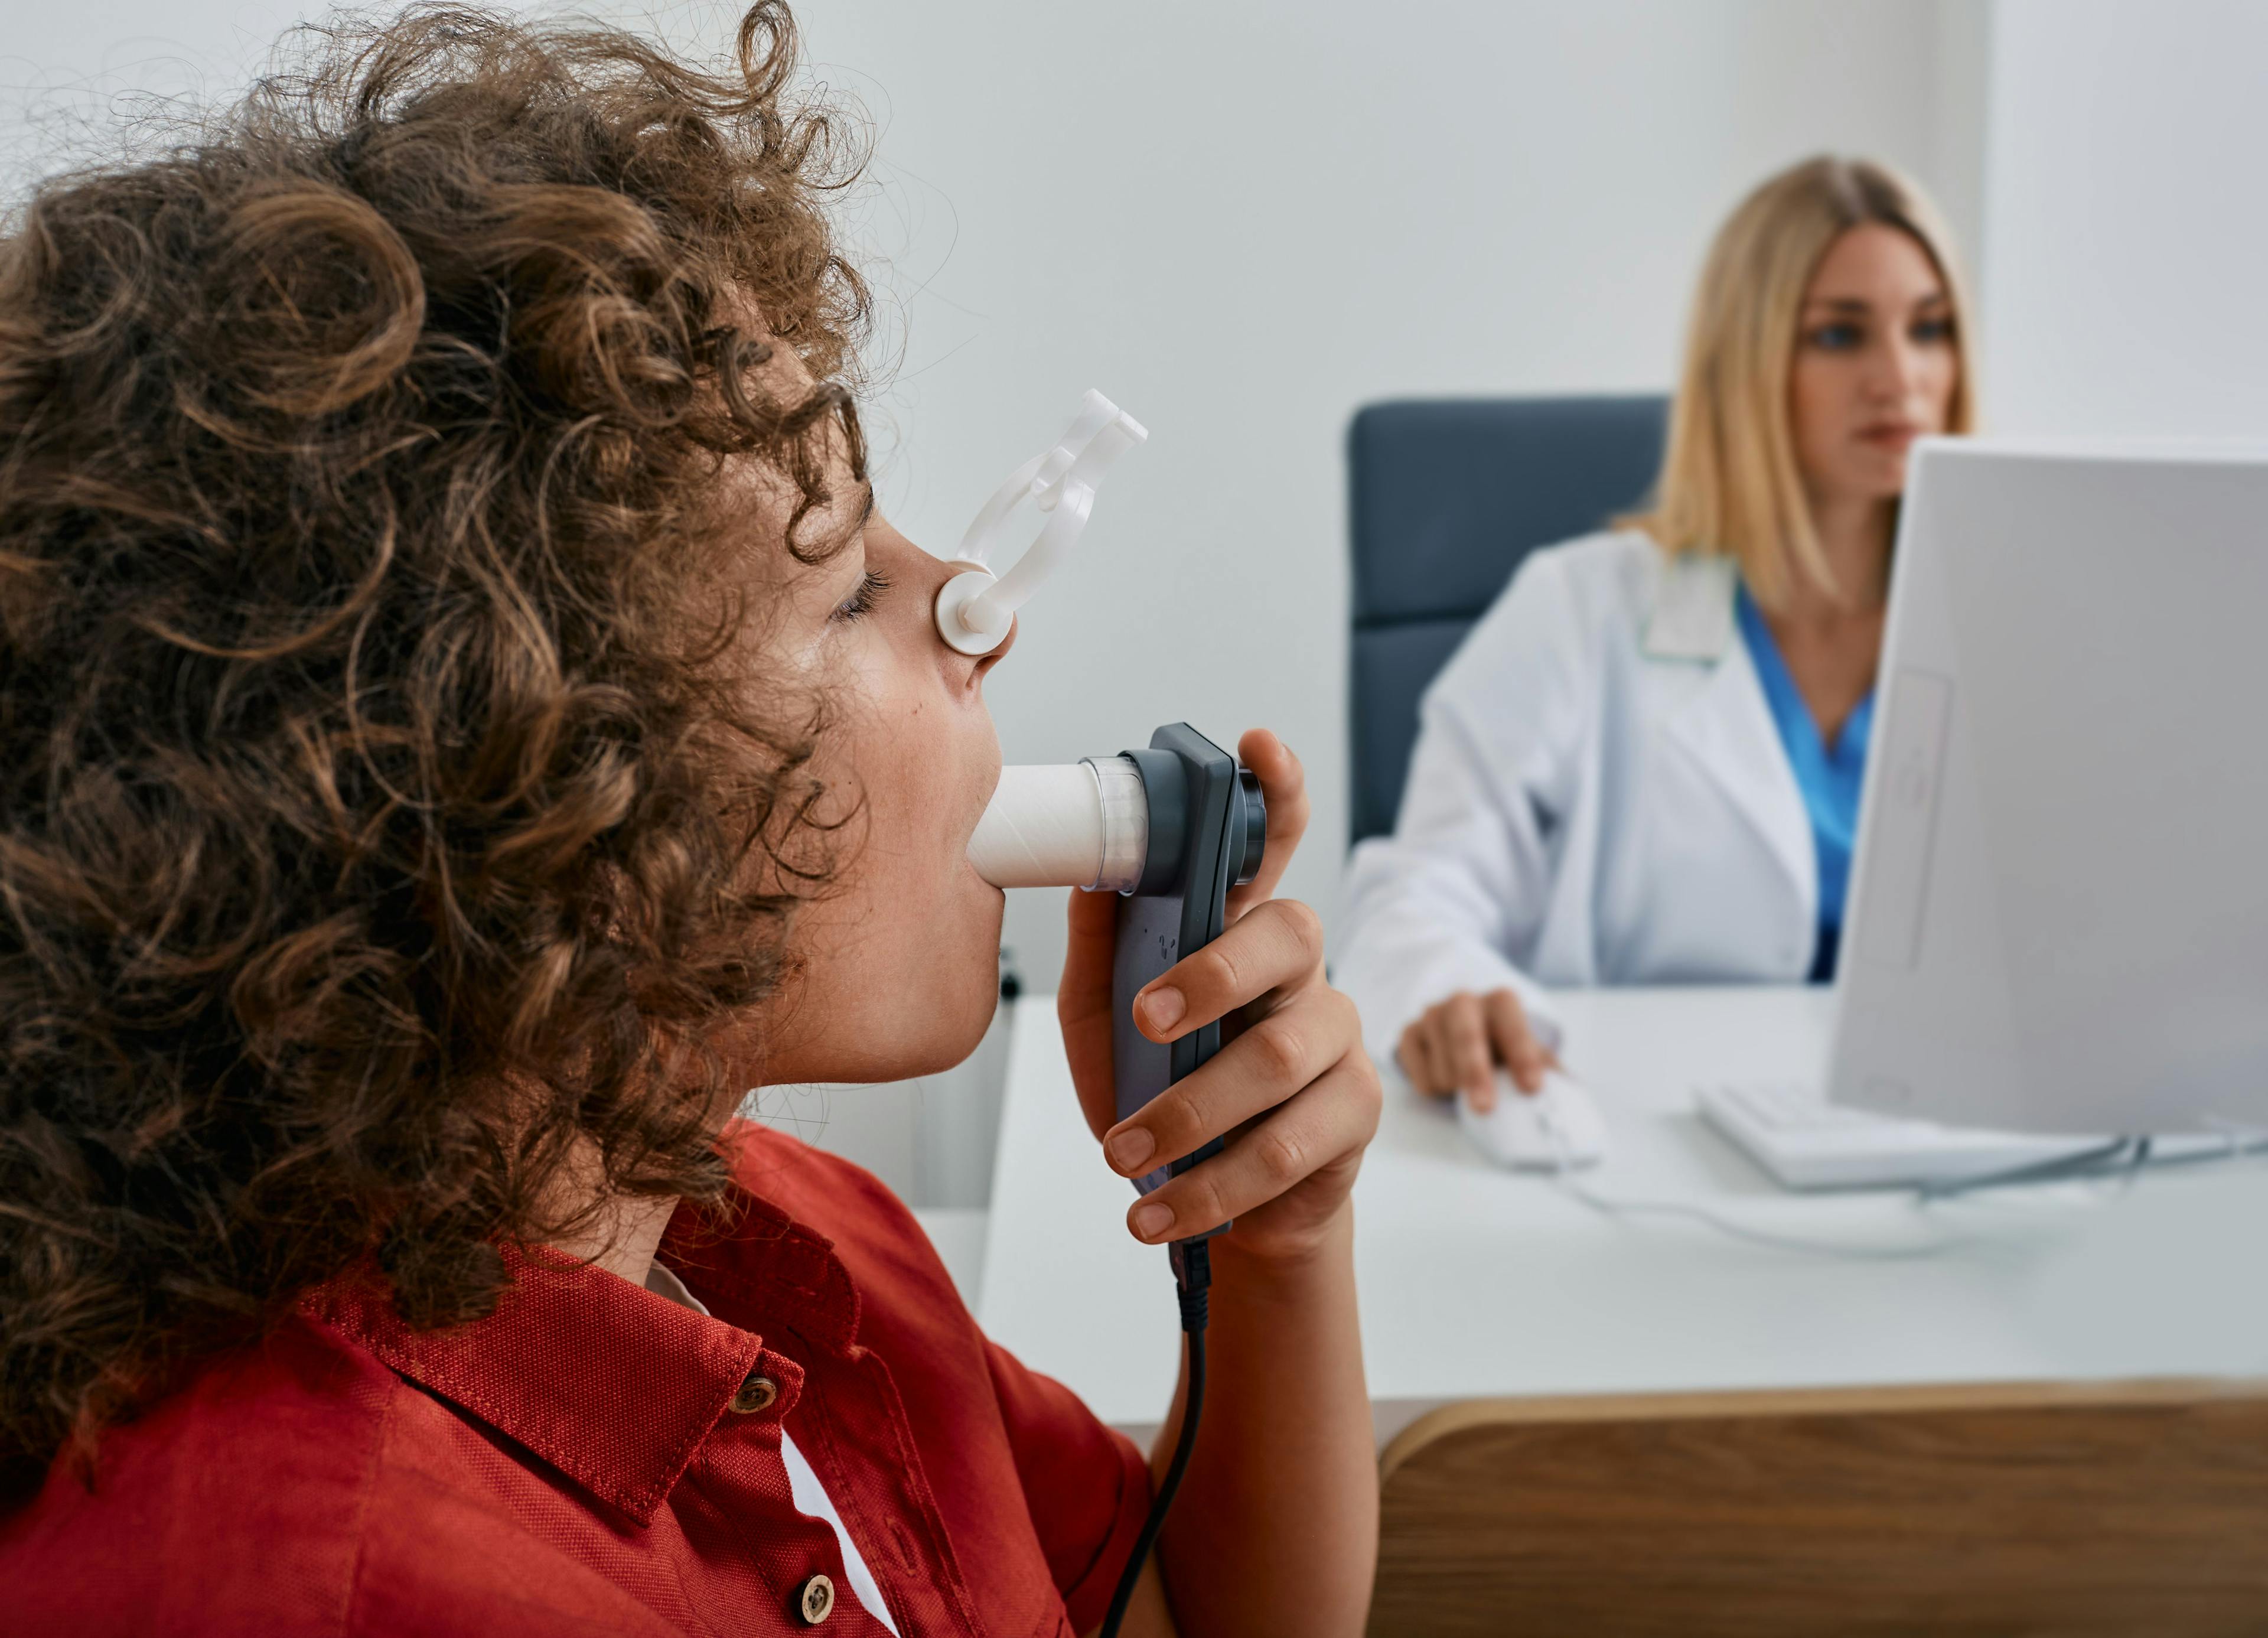 pulmonary function test using medical spirometer | Peakstock - stock.adobe.com